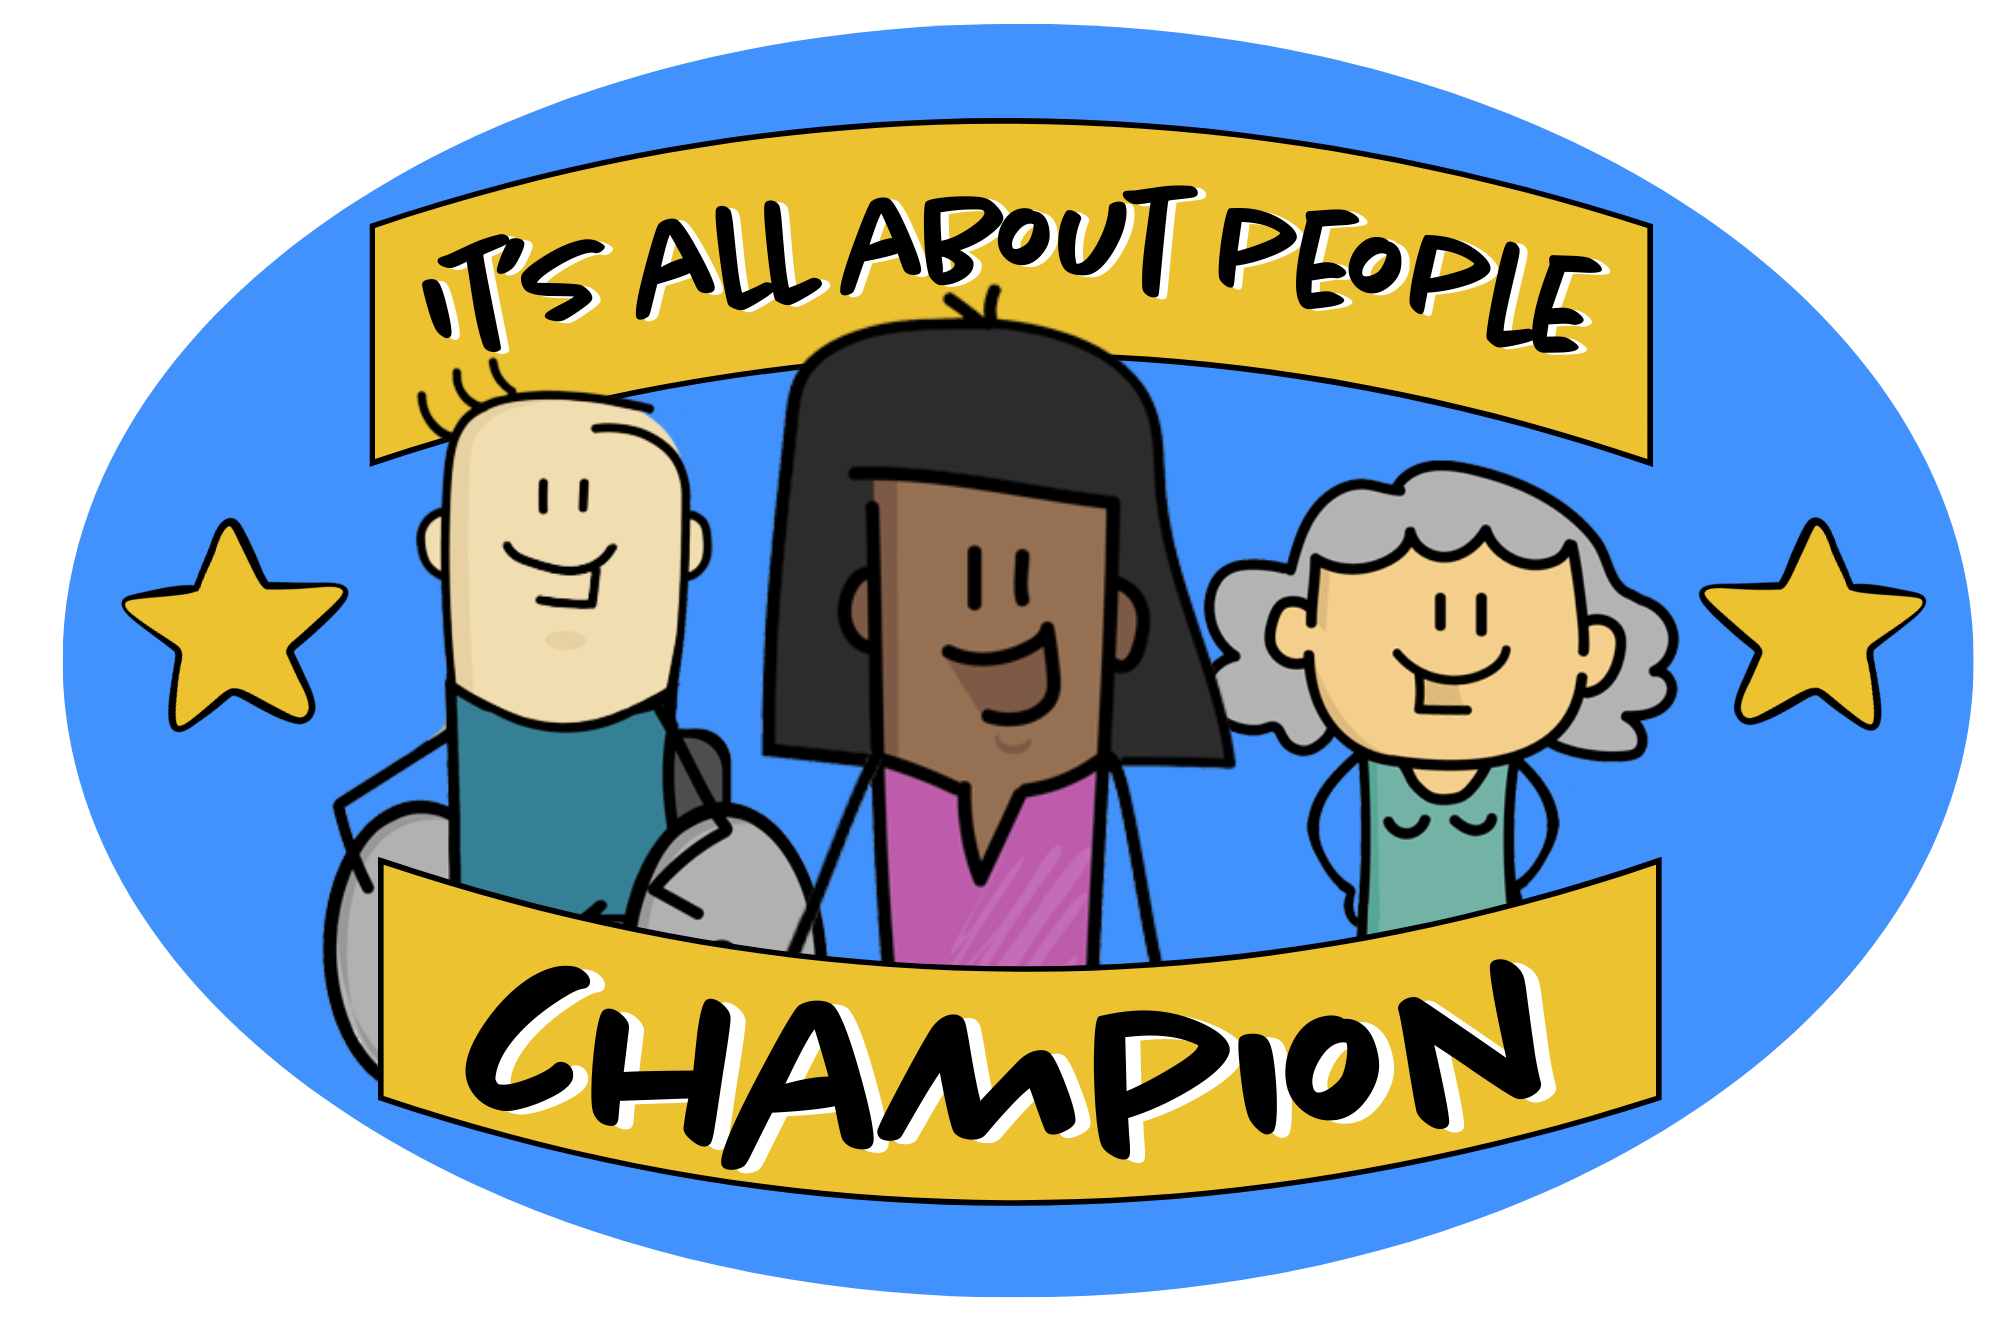 IAAP Champion sticker_DRAFT.png